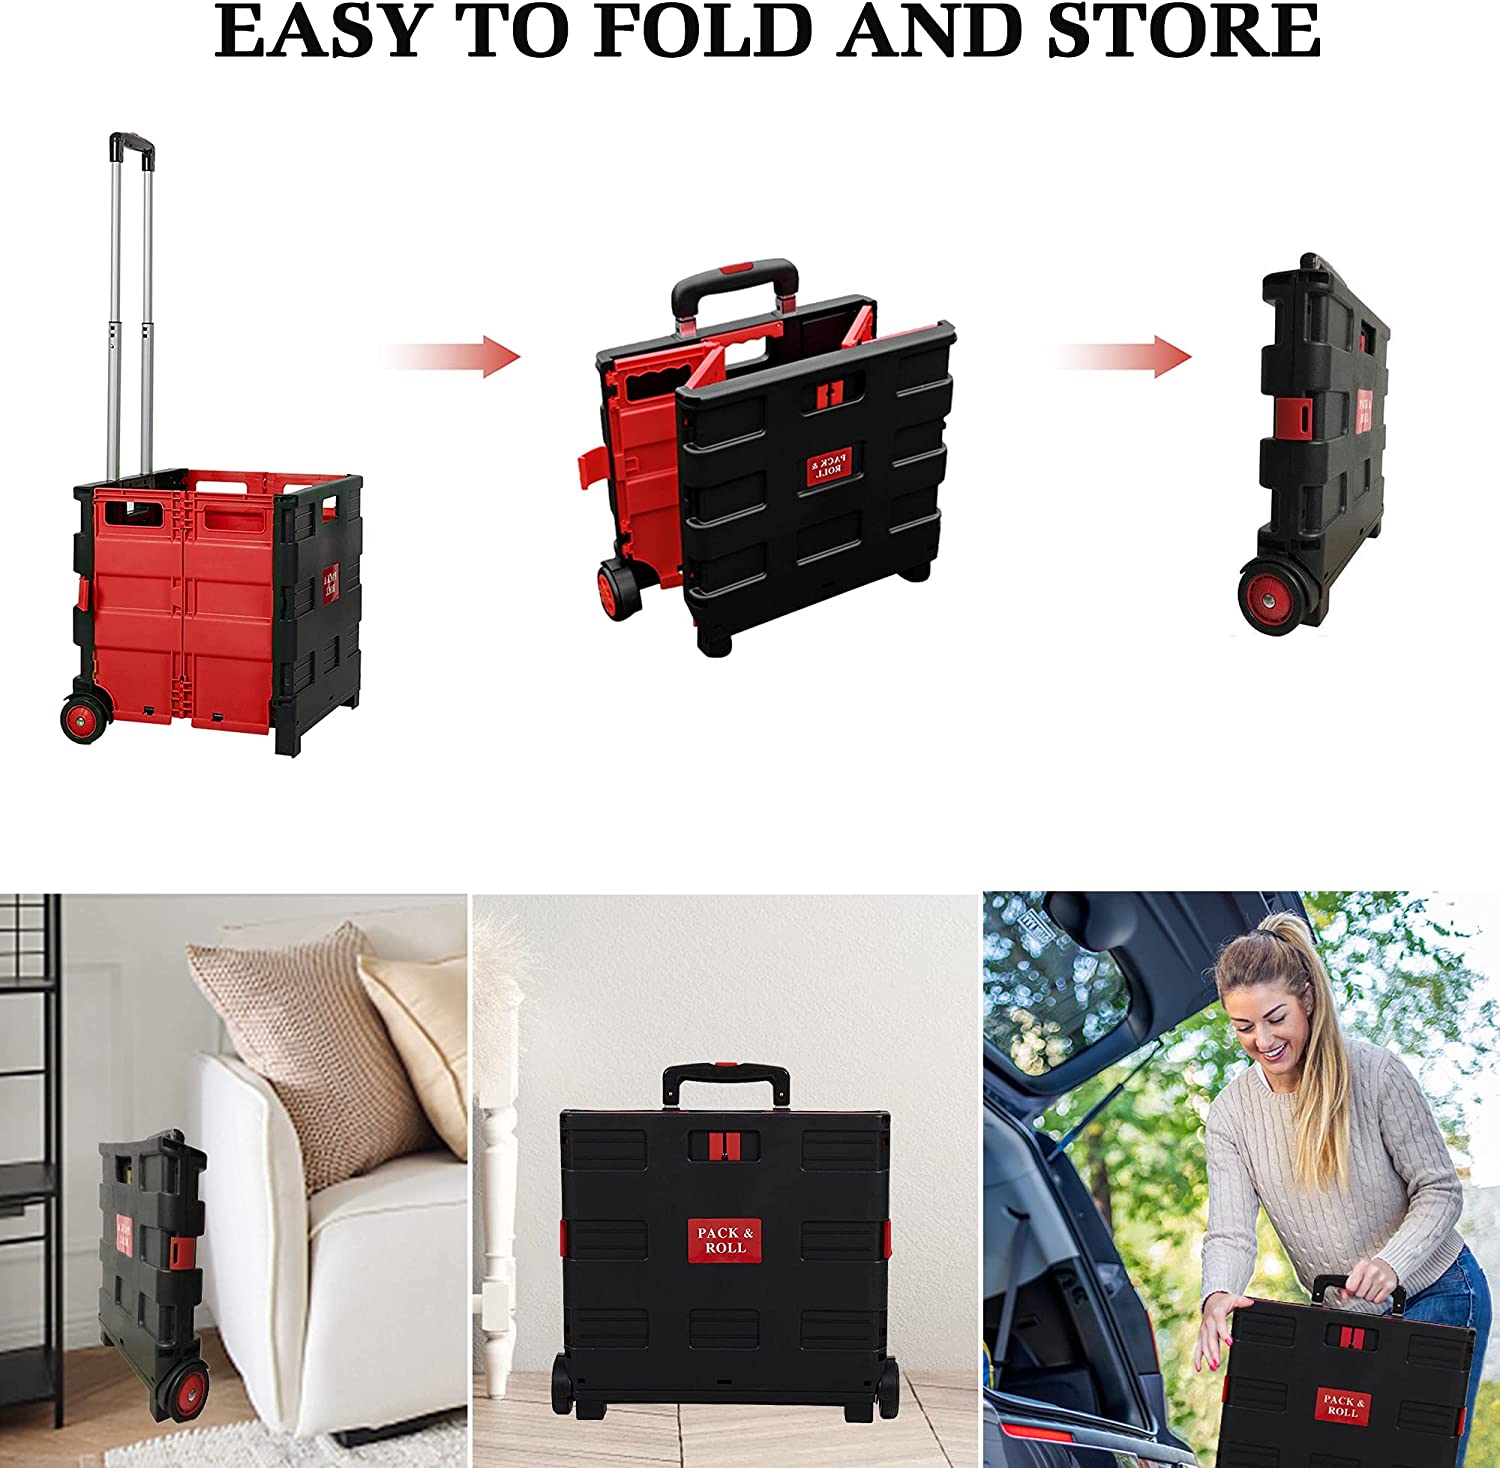 56L Large Folding Rolling Utility Shopping Cart, Black & Red